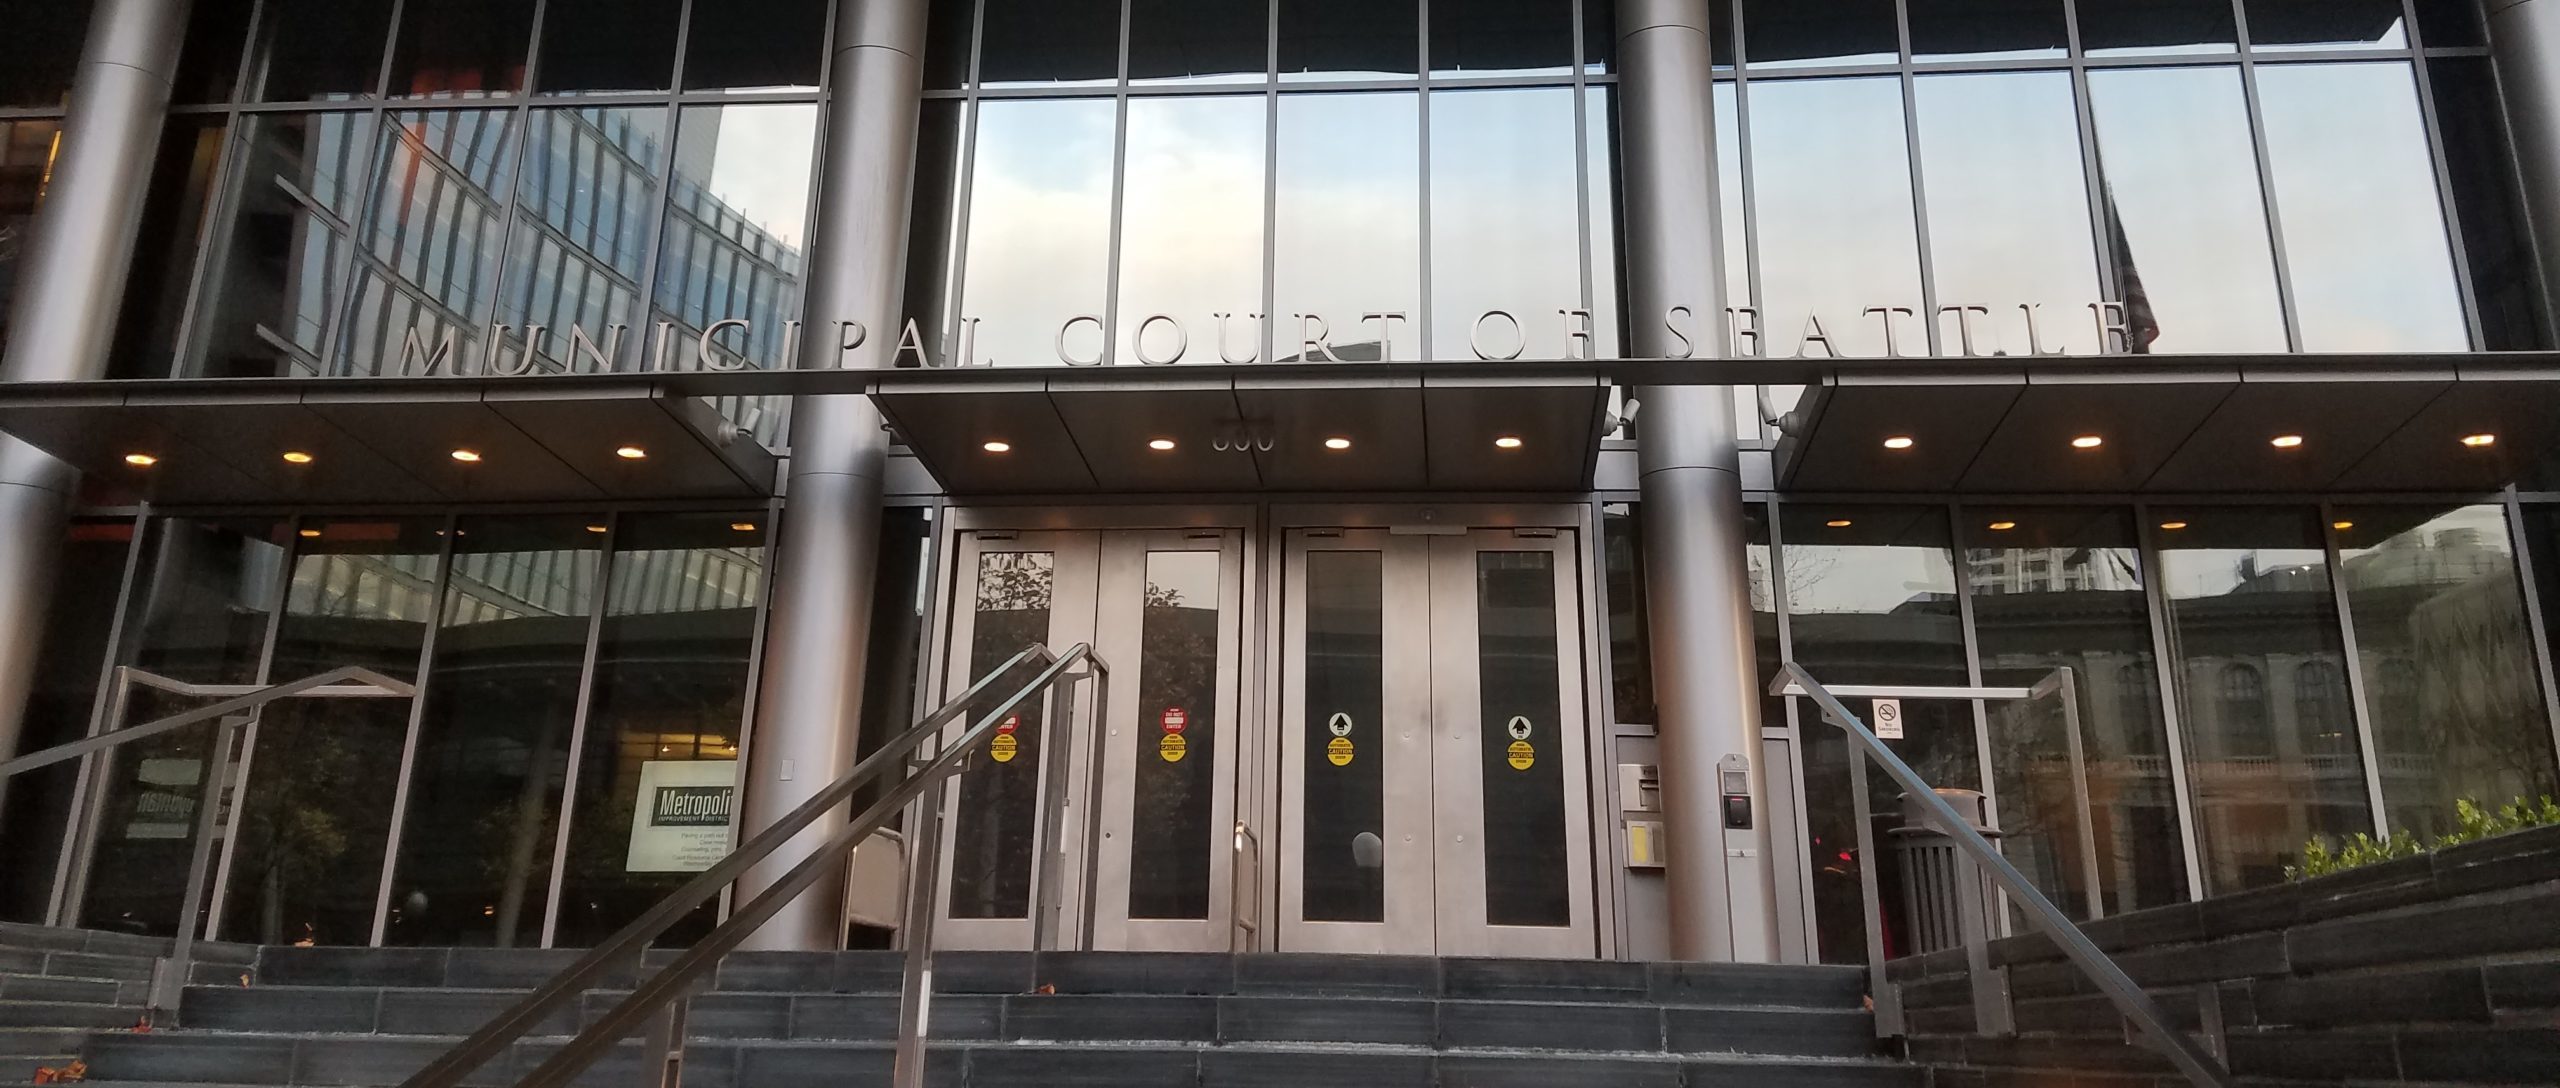 Seattle Municipal Court entrance